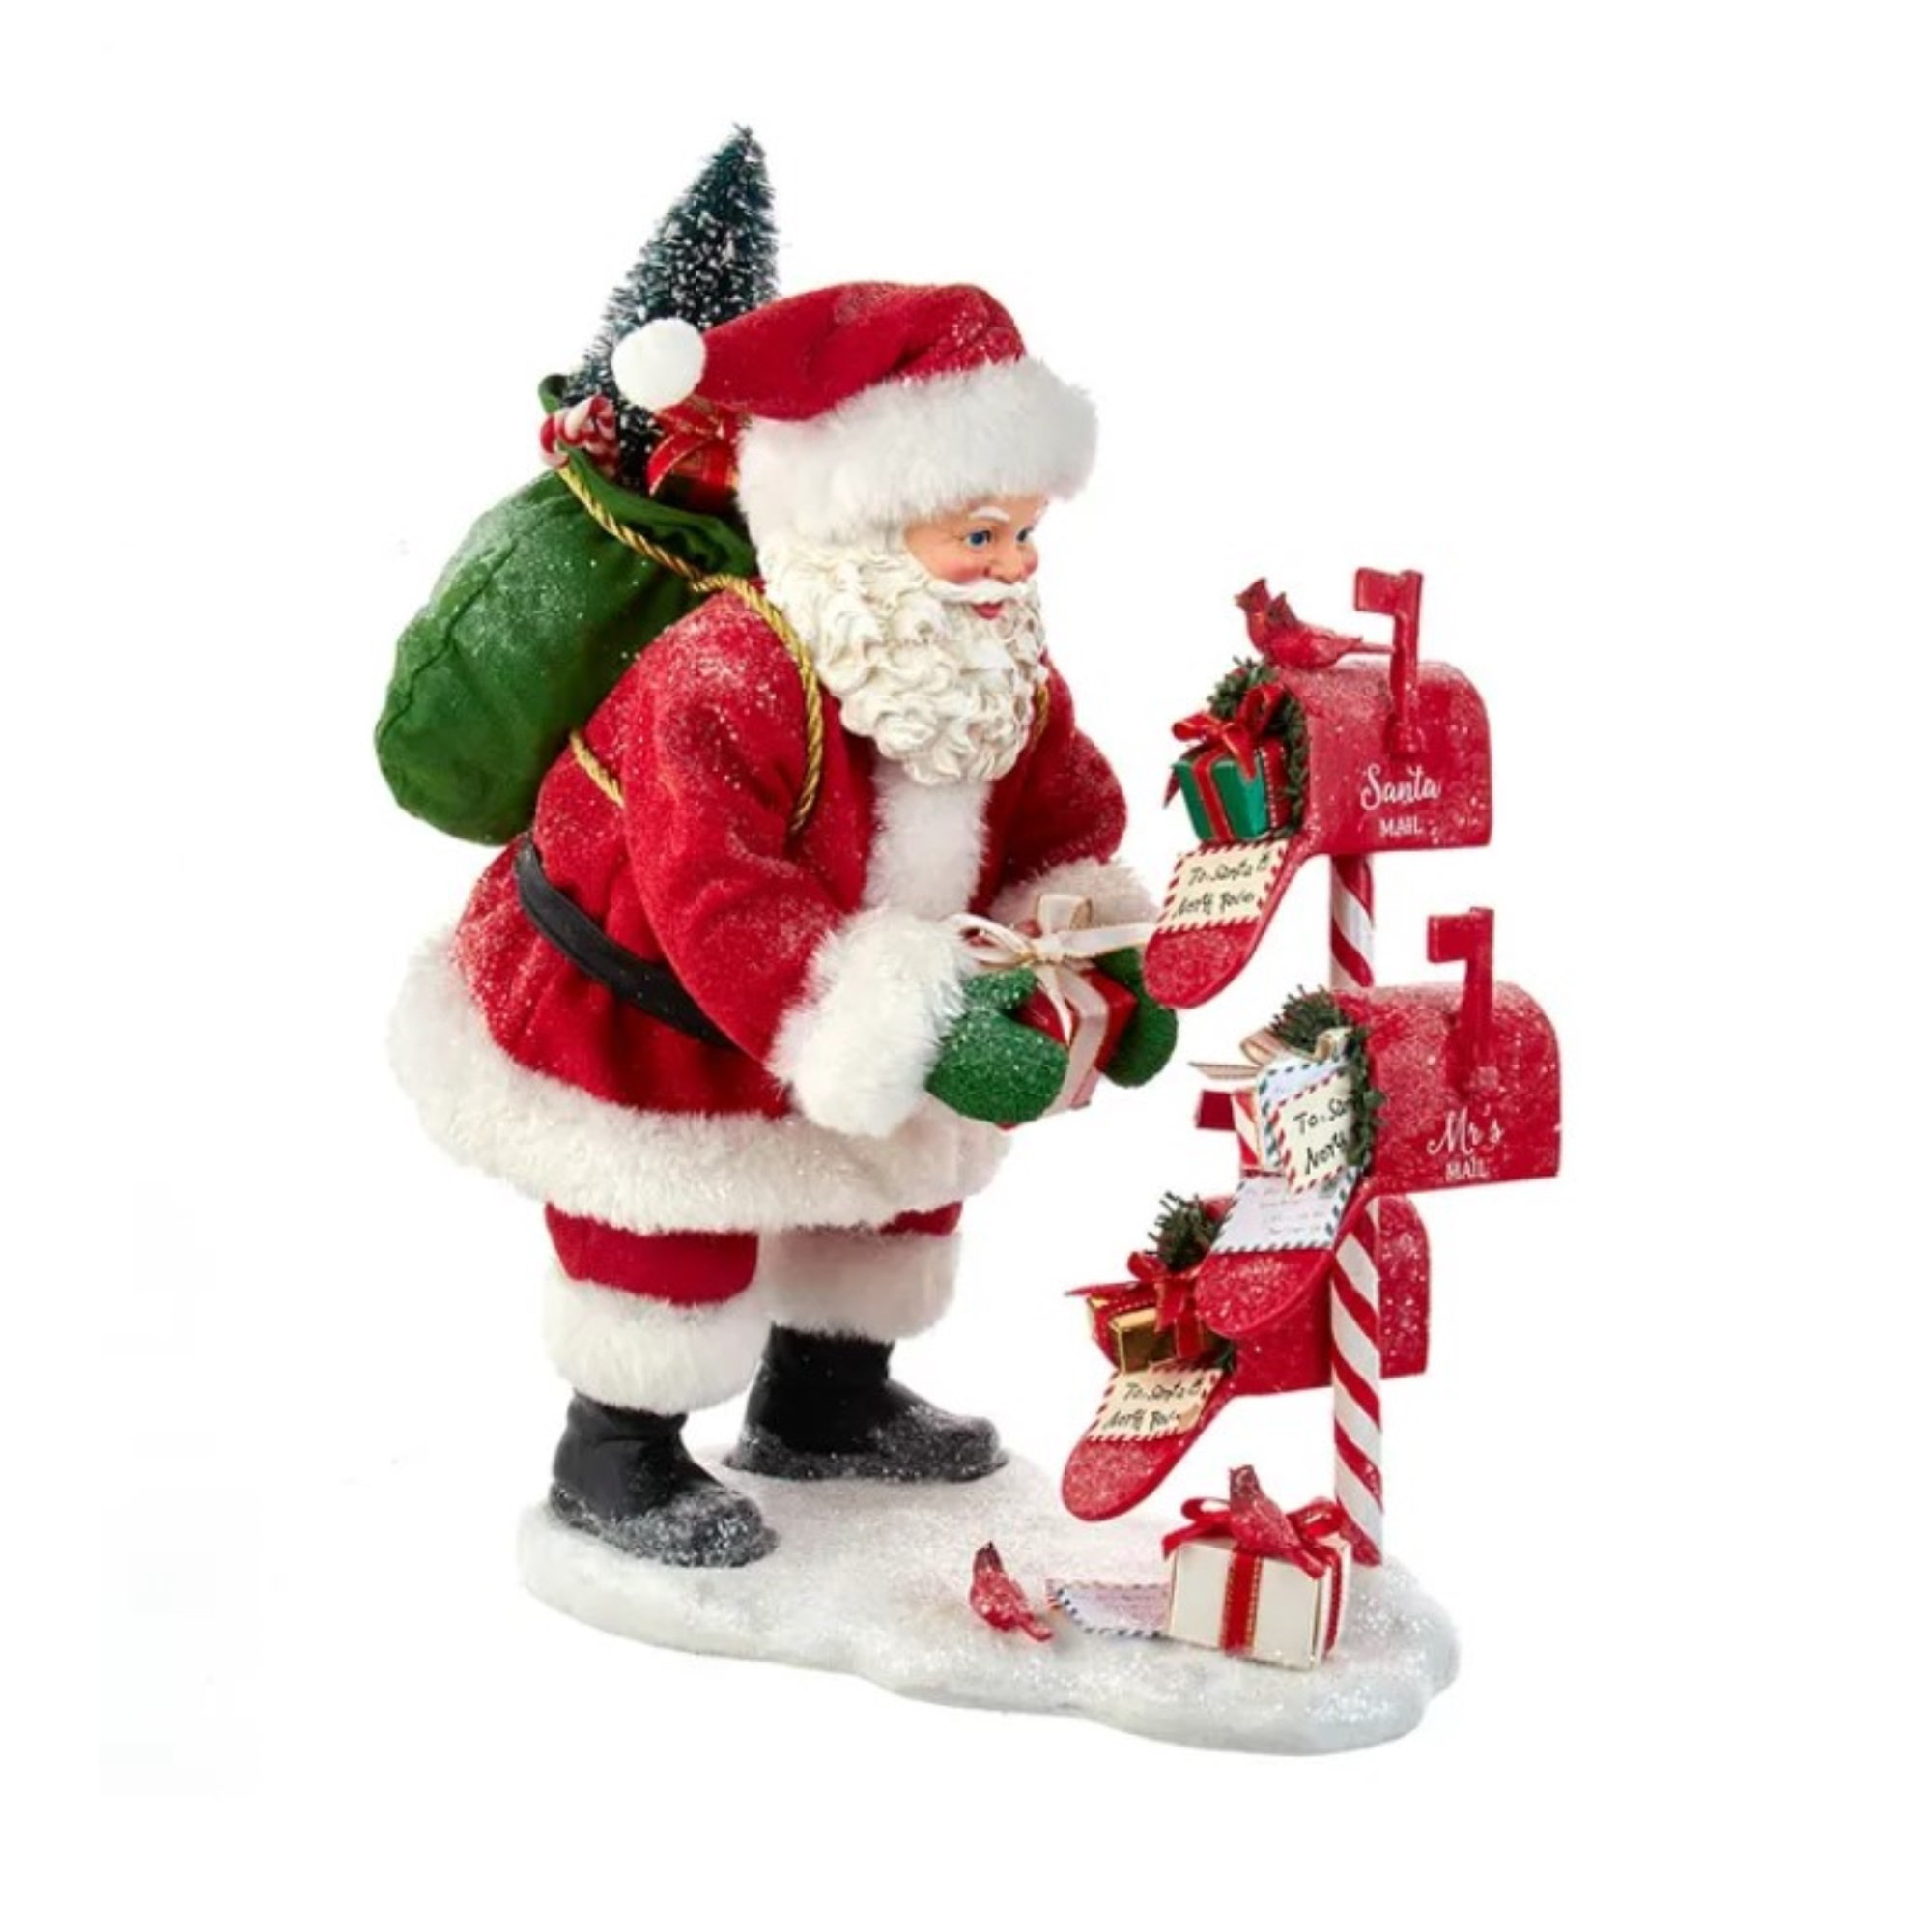 Kurt Adler Christmas No Subject Figurines & Collectibles | Wayfair